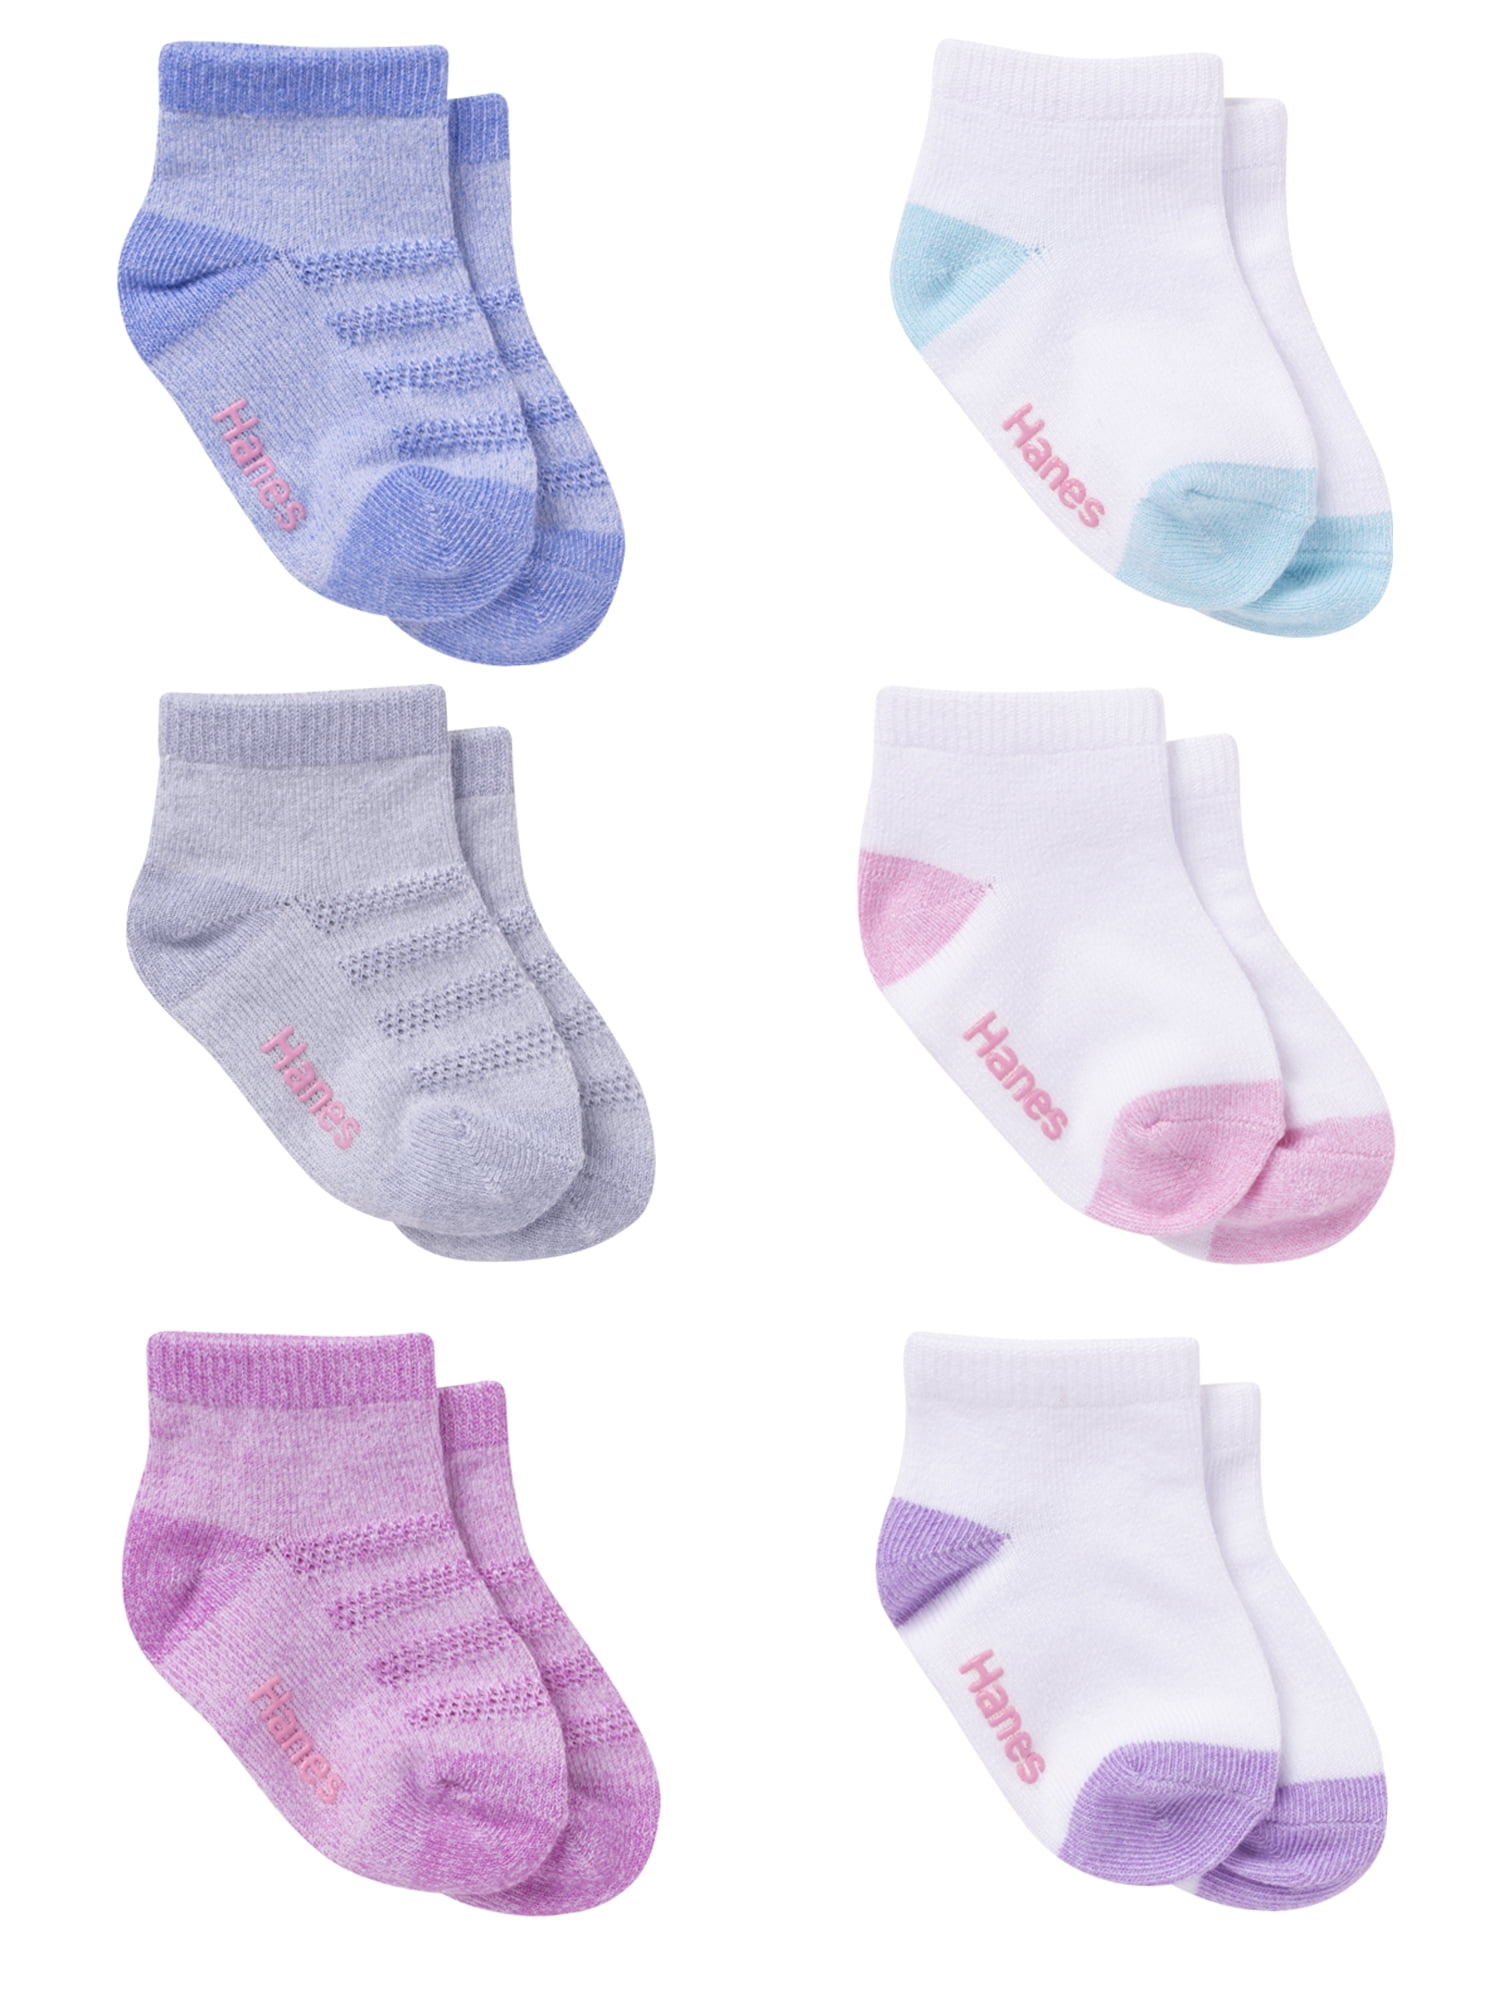 Toddler Kids baby Boys Girls Solid Anti-Slip Knitted Warm Socks Room Socks 12pc 